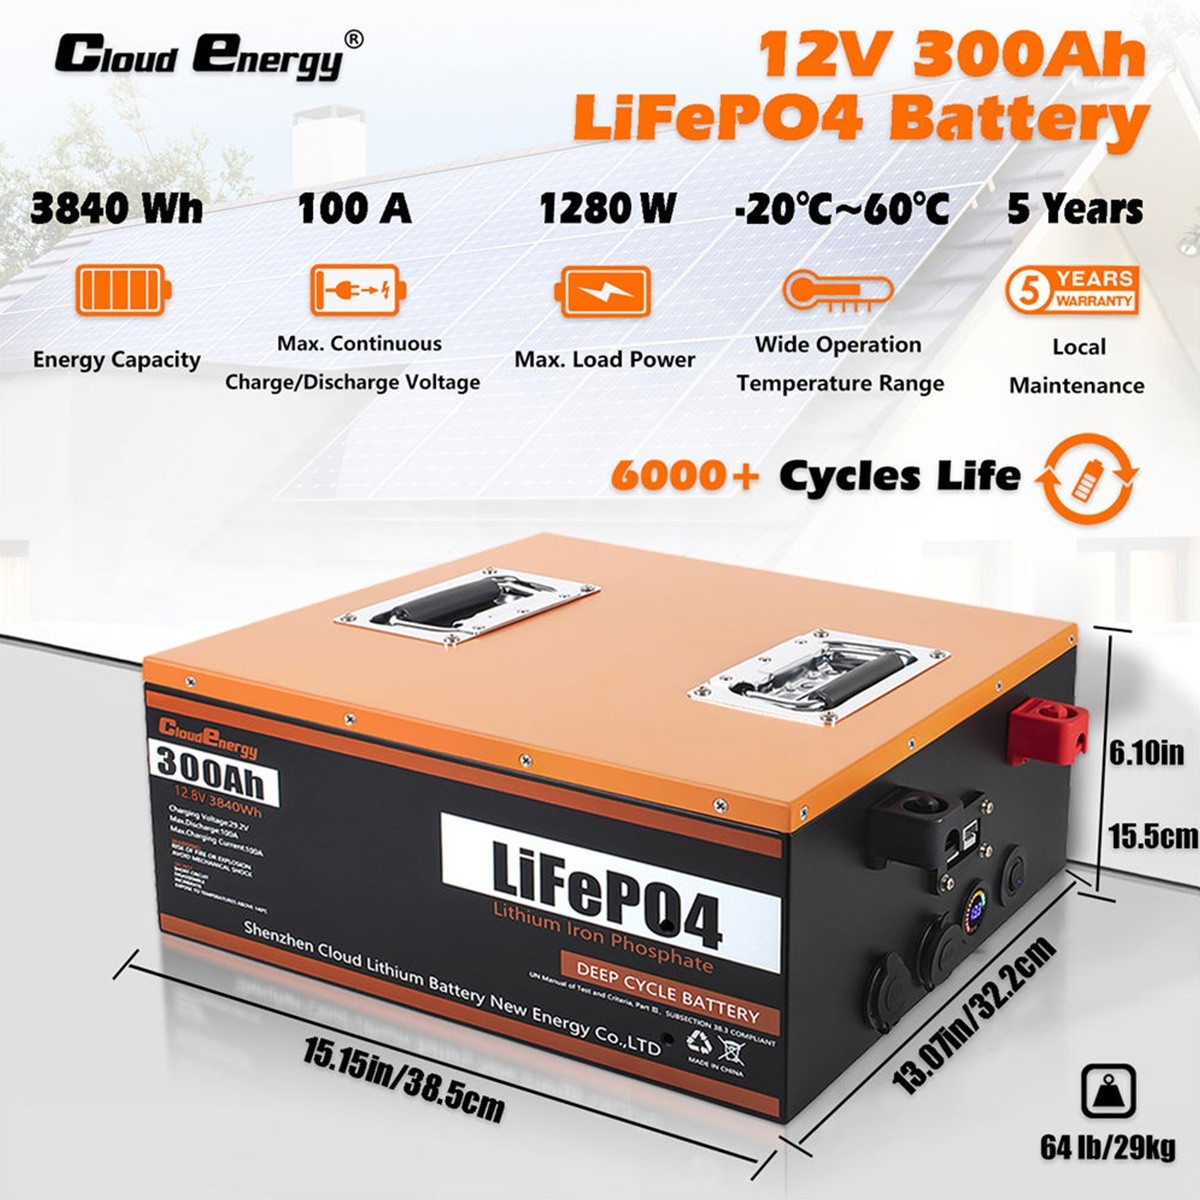 Cloudenergy 12V 300Ah LiFePO4 batteri